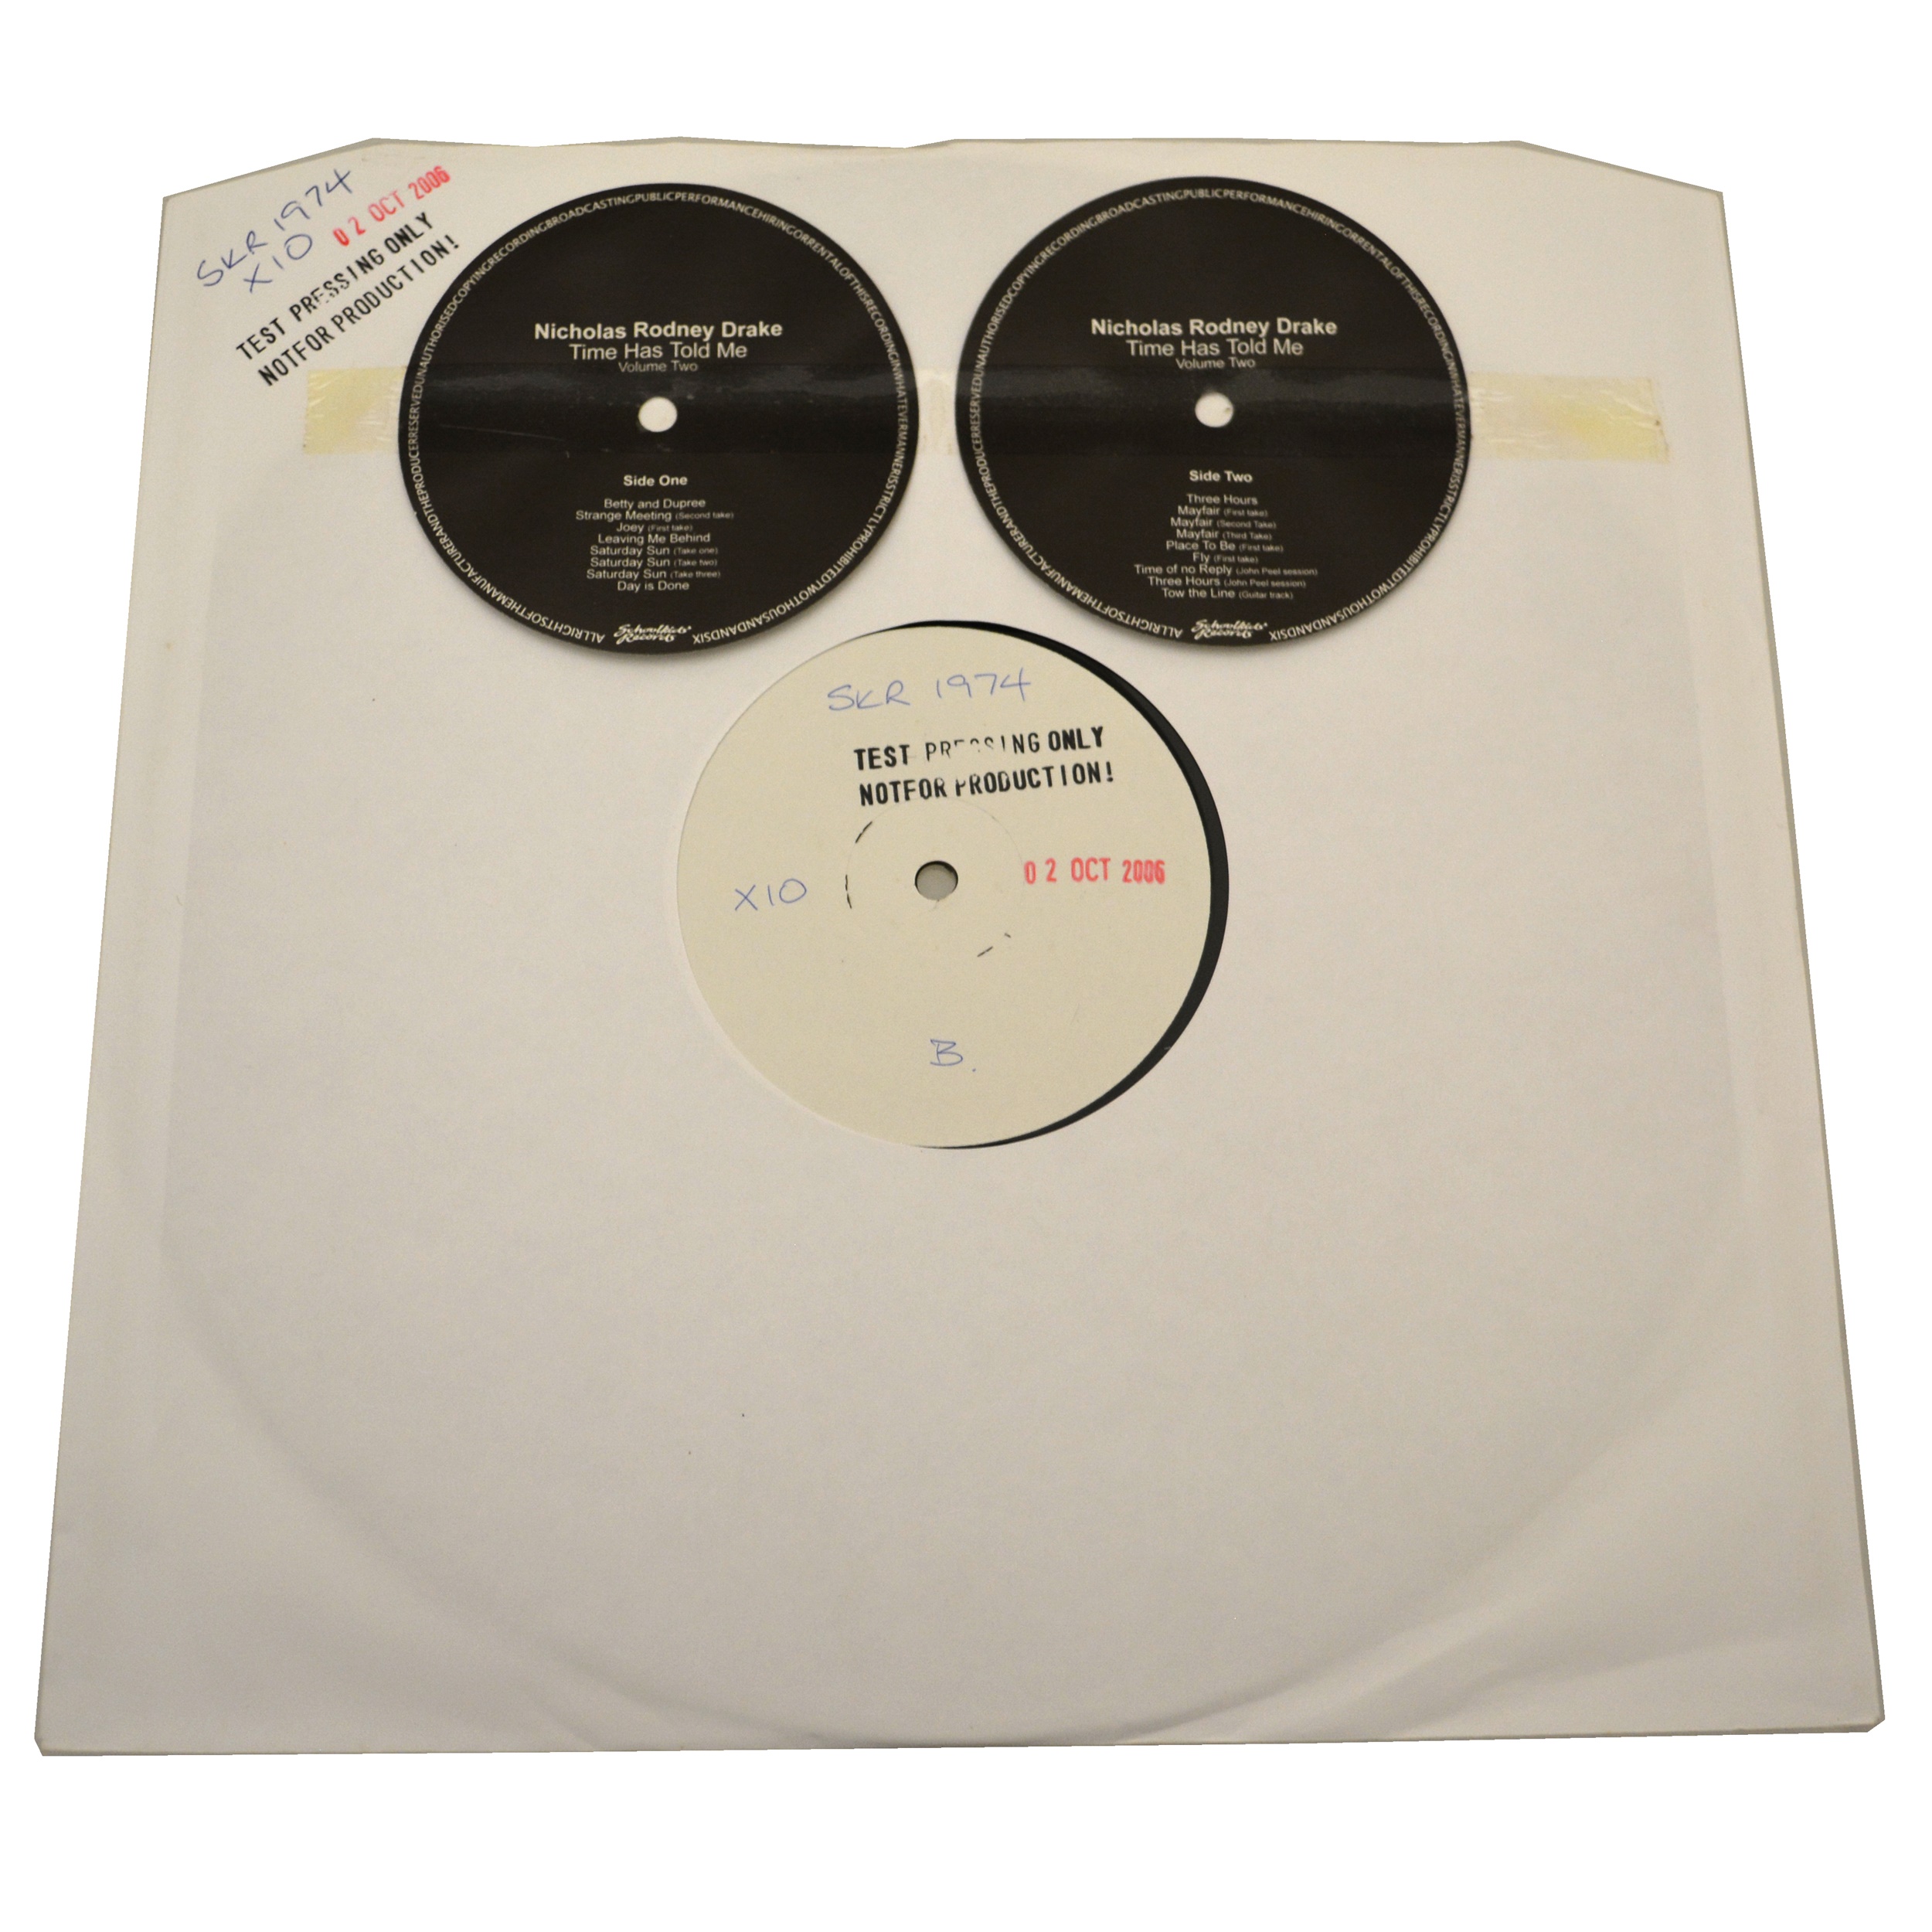 Nicholas Rodney Drake "Nick Drake"; White label test pressing vinyl record